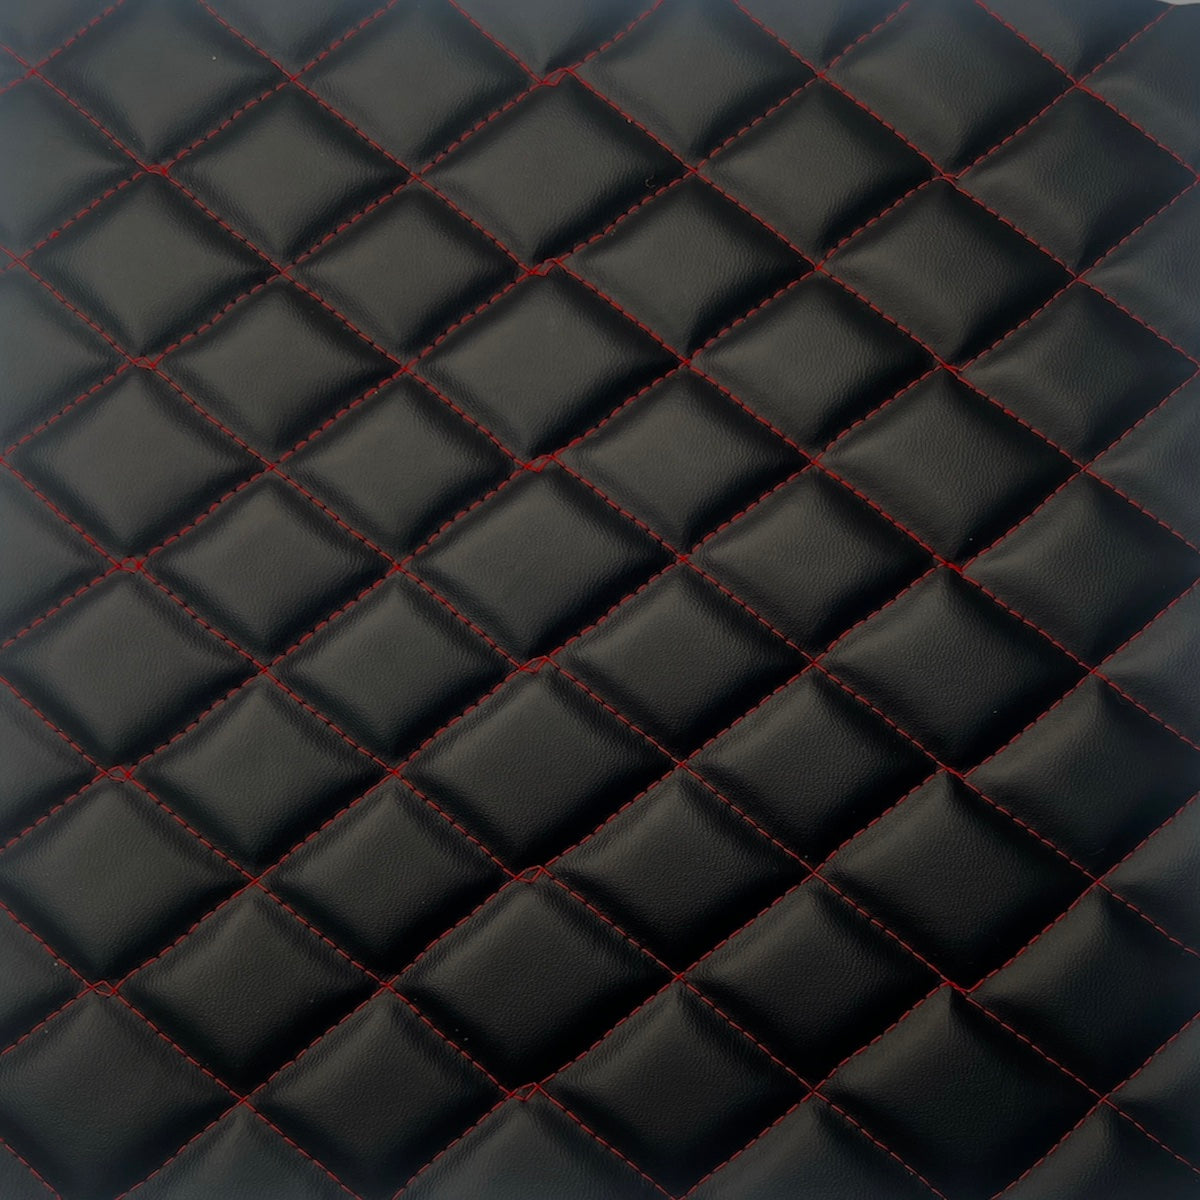 Black Diamond Pattern Leather Seamless Texture Free (Fabric